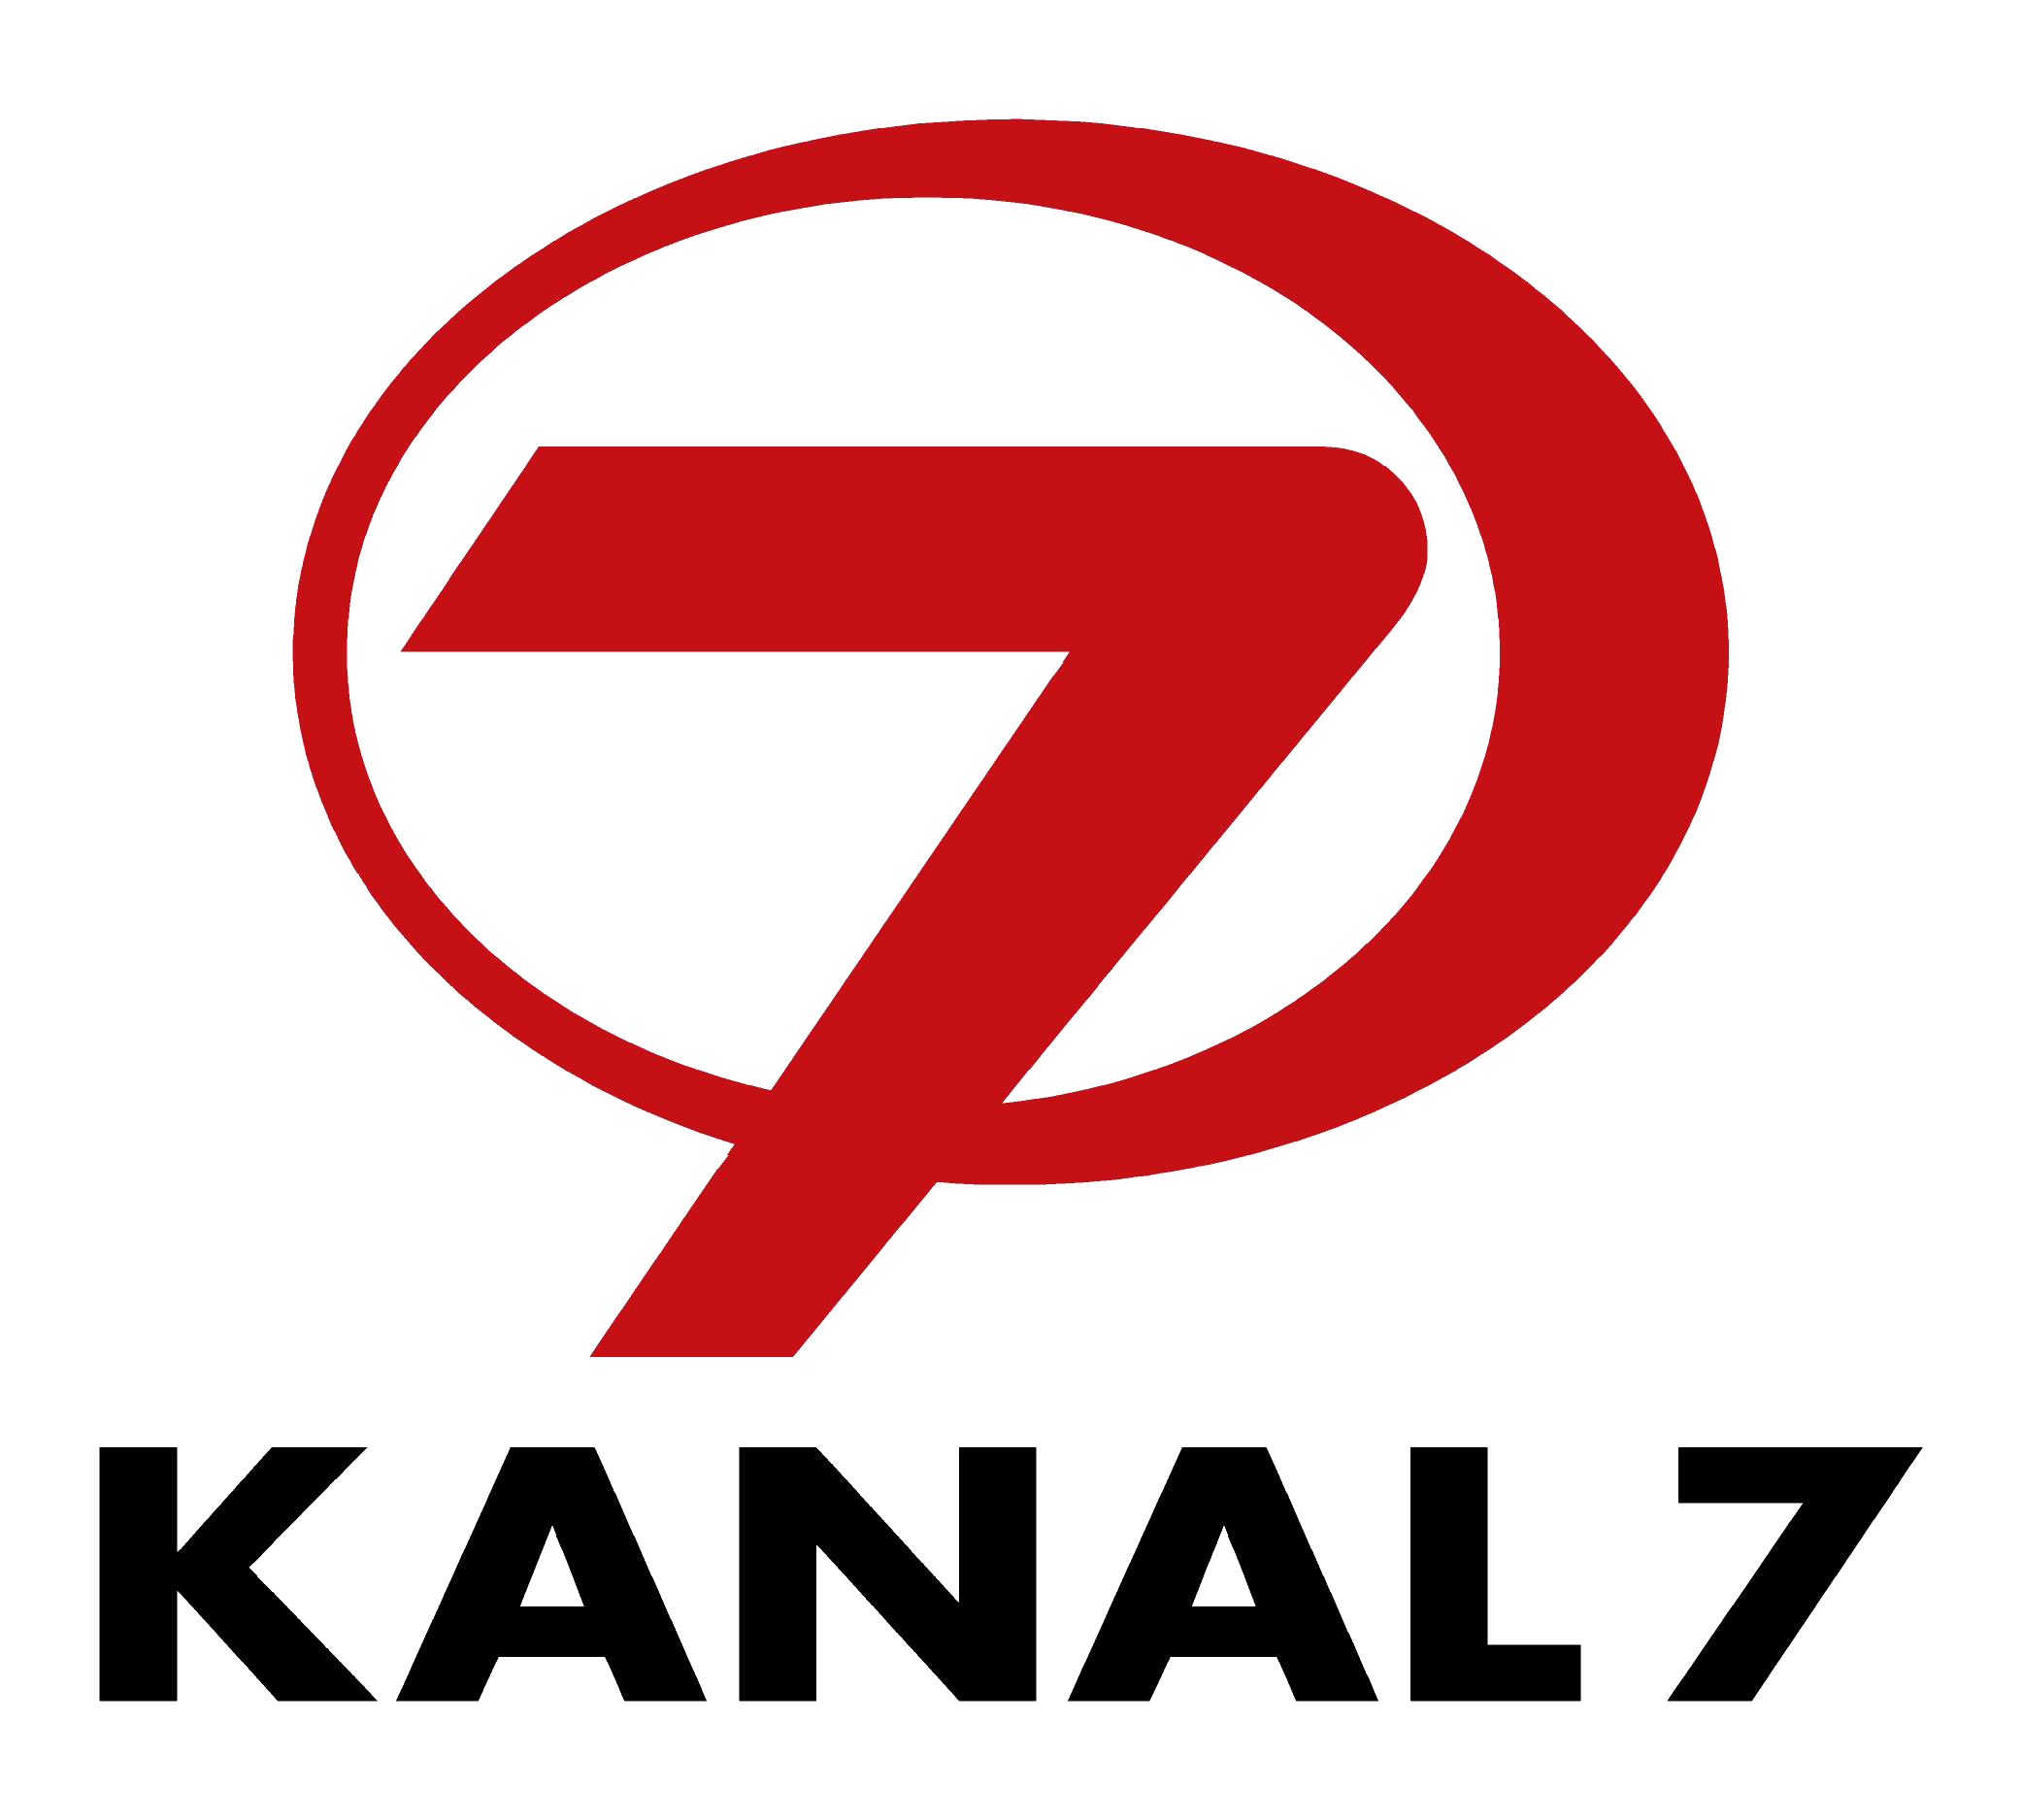 Kanal 7 canlı yayın izle. 7 Канал. 7тв логотип. Лого телеканала 7. Турецкий канал kanal 7 логотип.